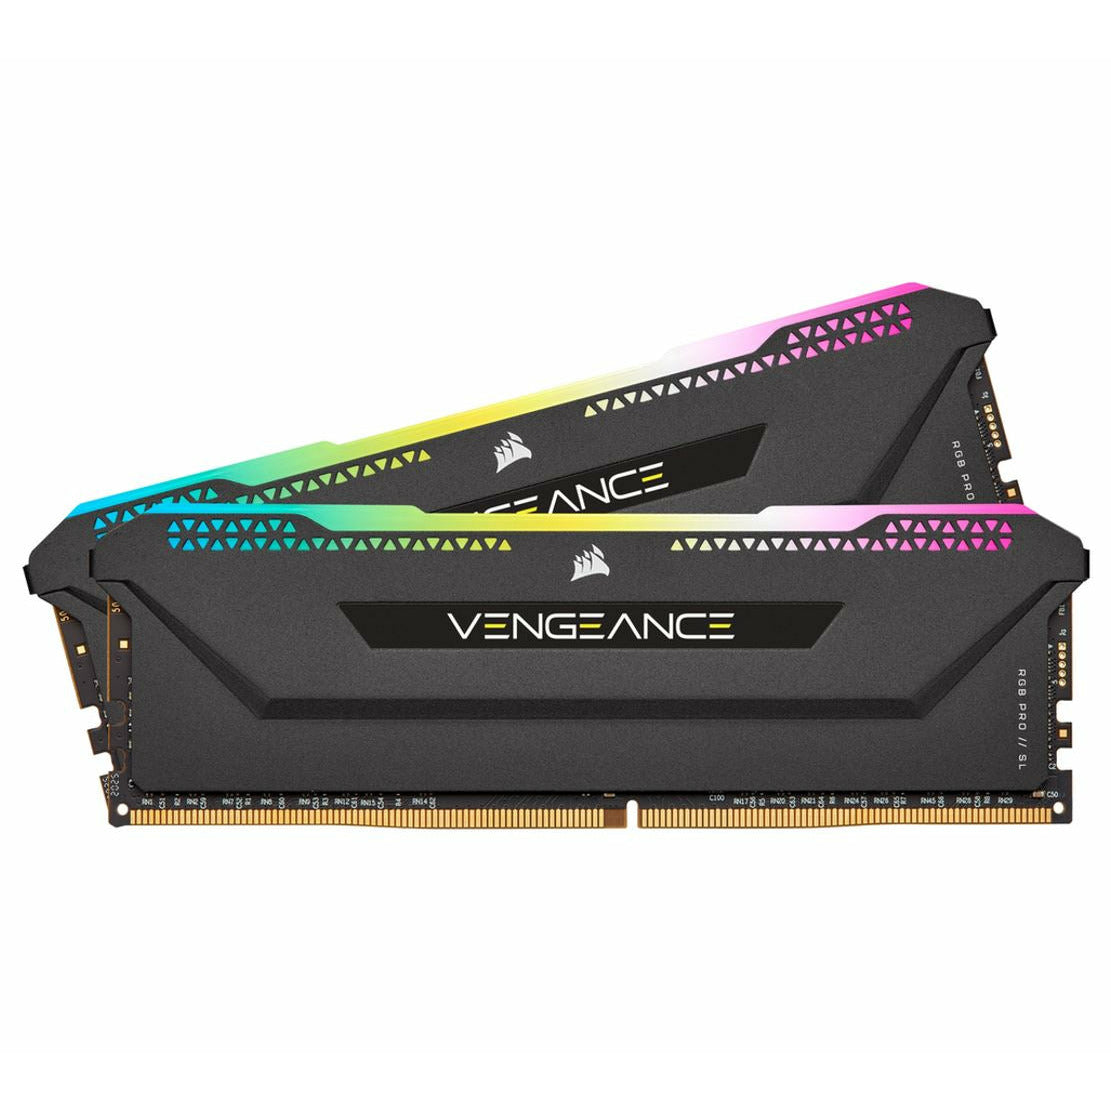 CORSAIR Vengeance RGB PRO SL 16GB (2x8GB) DDR4 3600Mhz C18 Black Heatspreader for AMD Desktop Gaming Memory